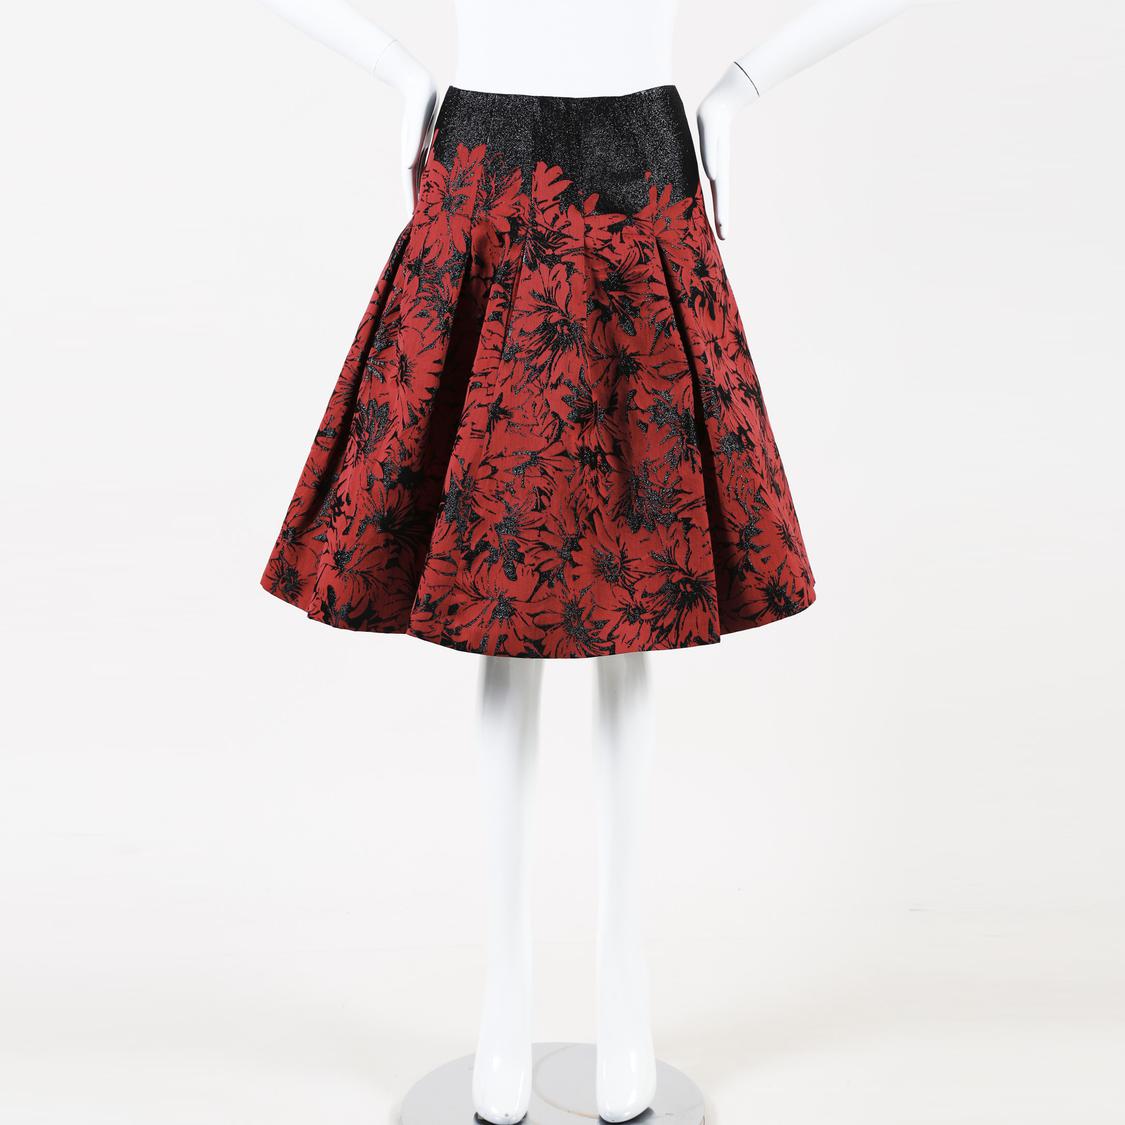 Carolina Herrera Cotton Blend Floral Skirt in Black/Red (Red) - Lyst